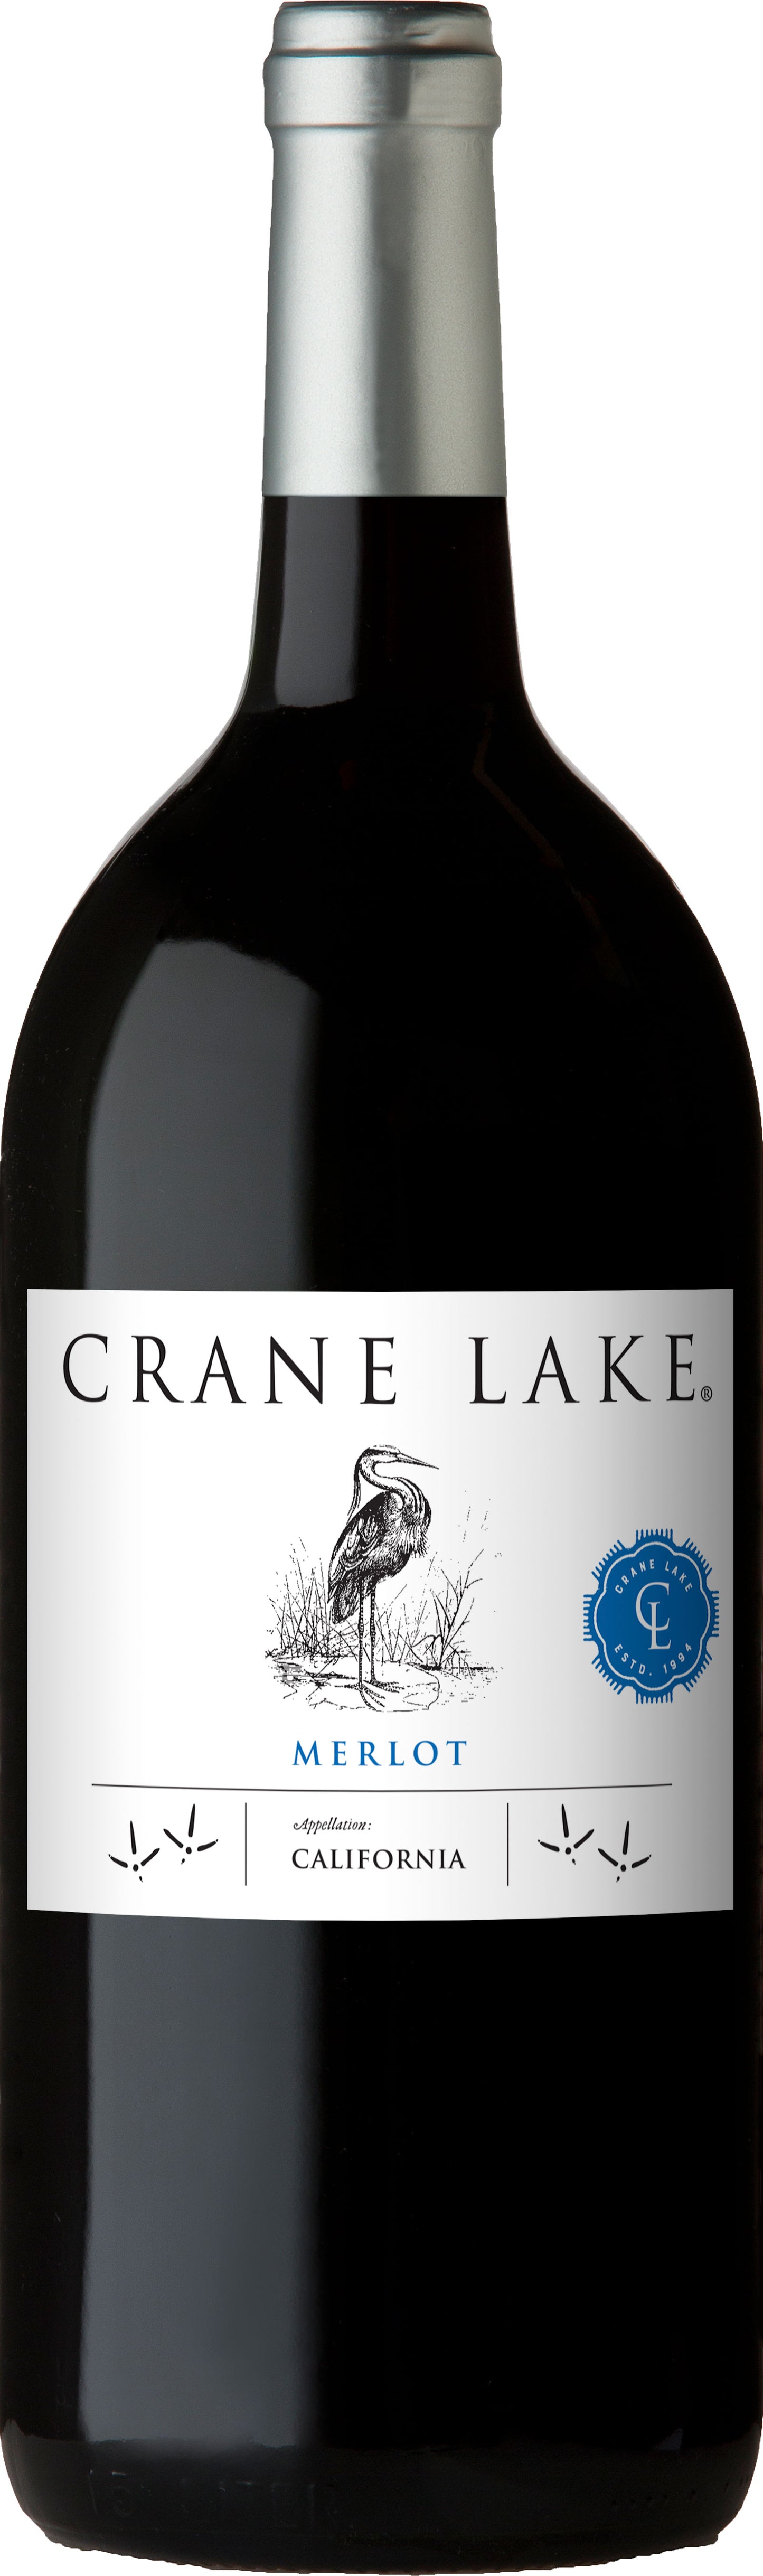 Crane Lake Merlot 2017